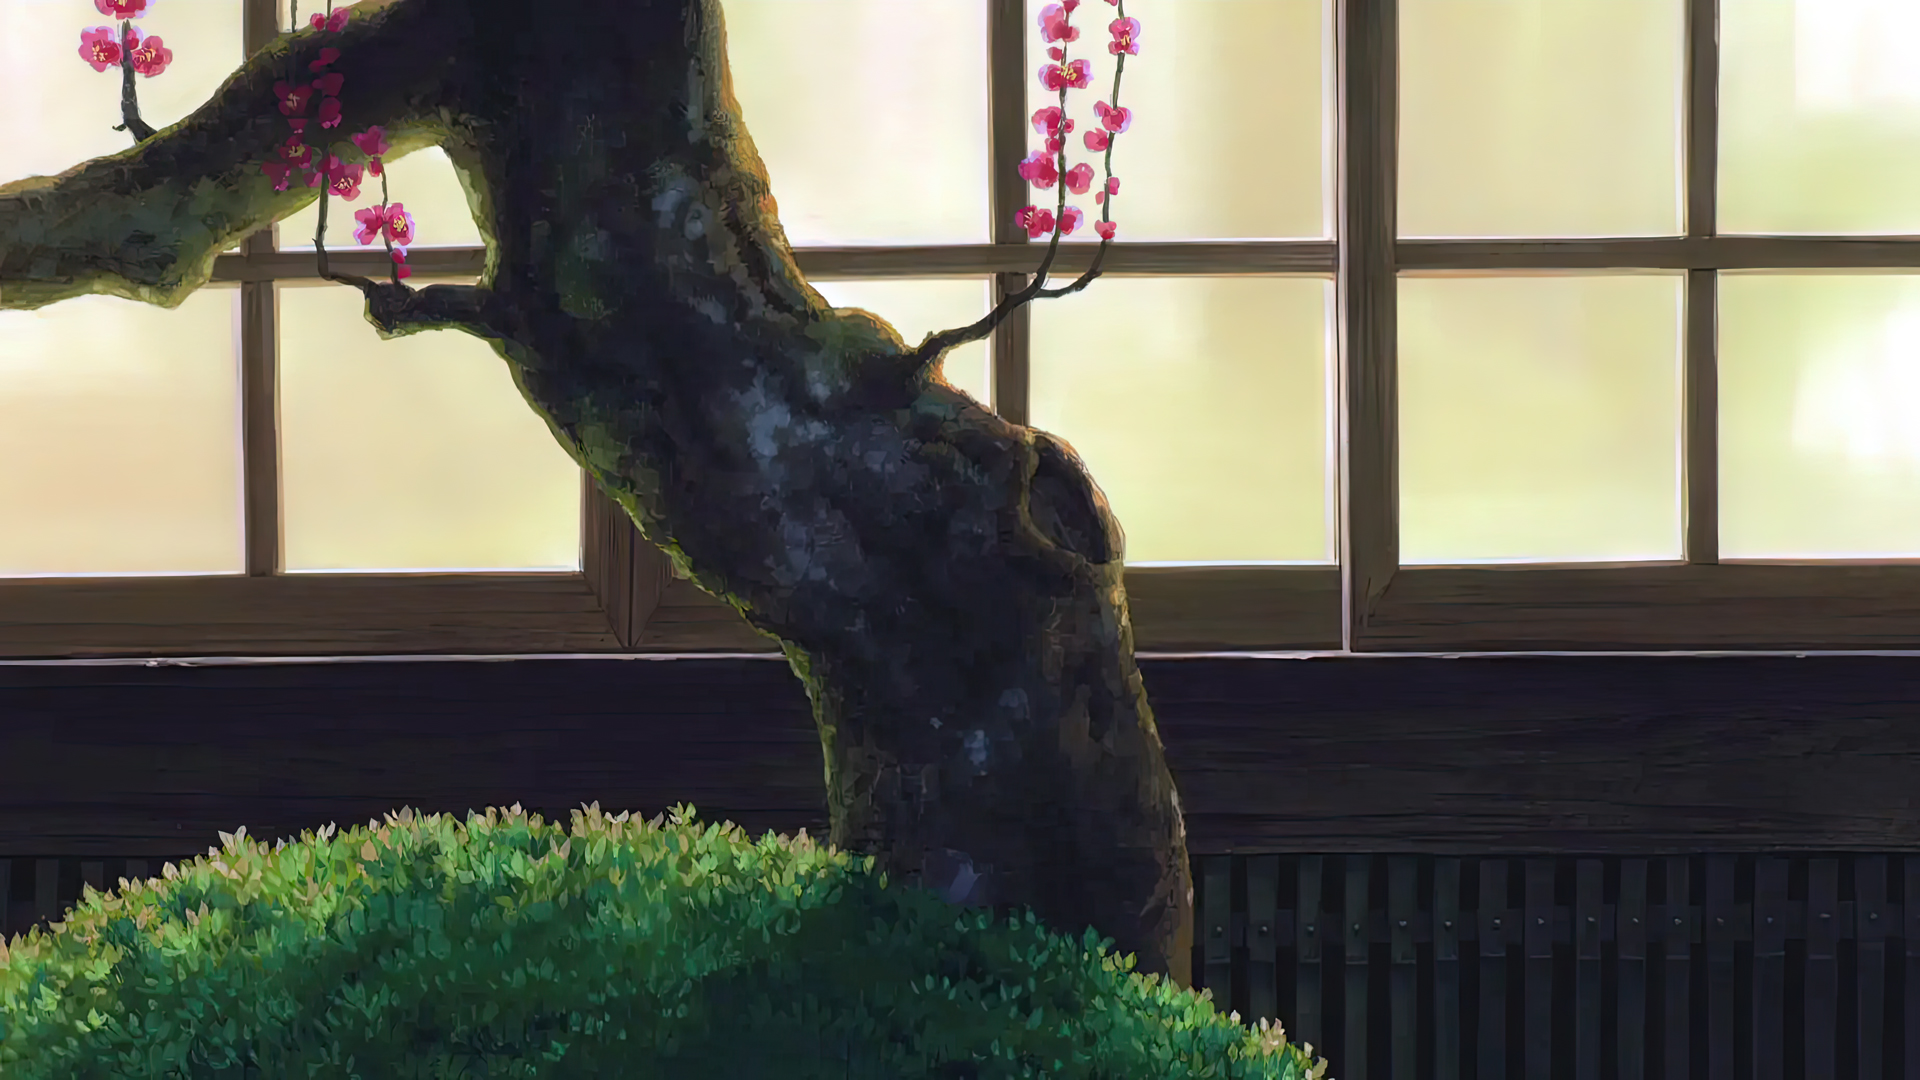 Anime 1920x1080 Spirited Away anime animation animated movies Hayao Miyazaki Studio Ghibli cherry trees window bushes film stills branch flowers